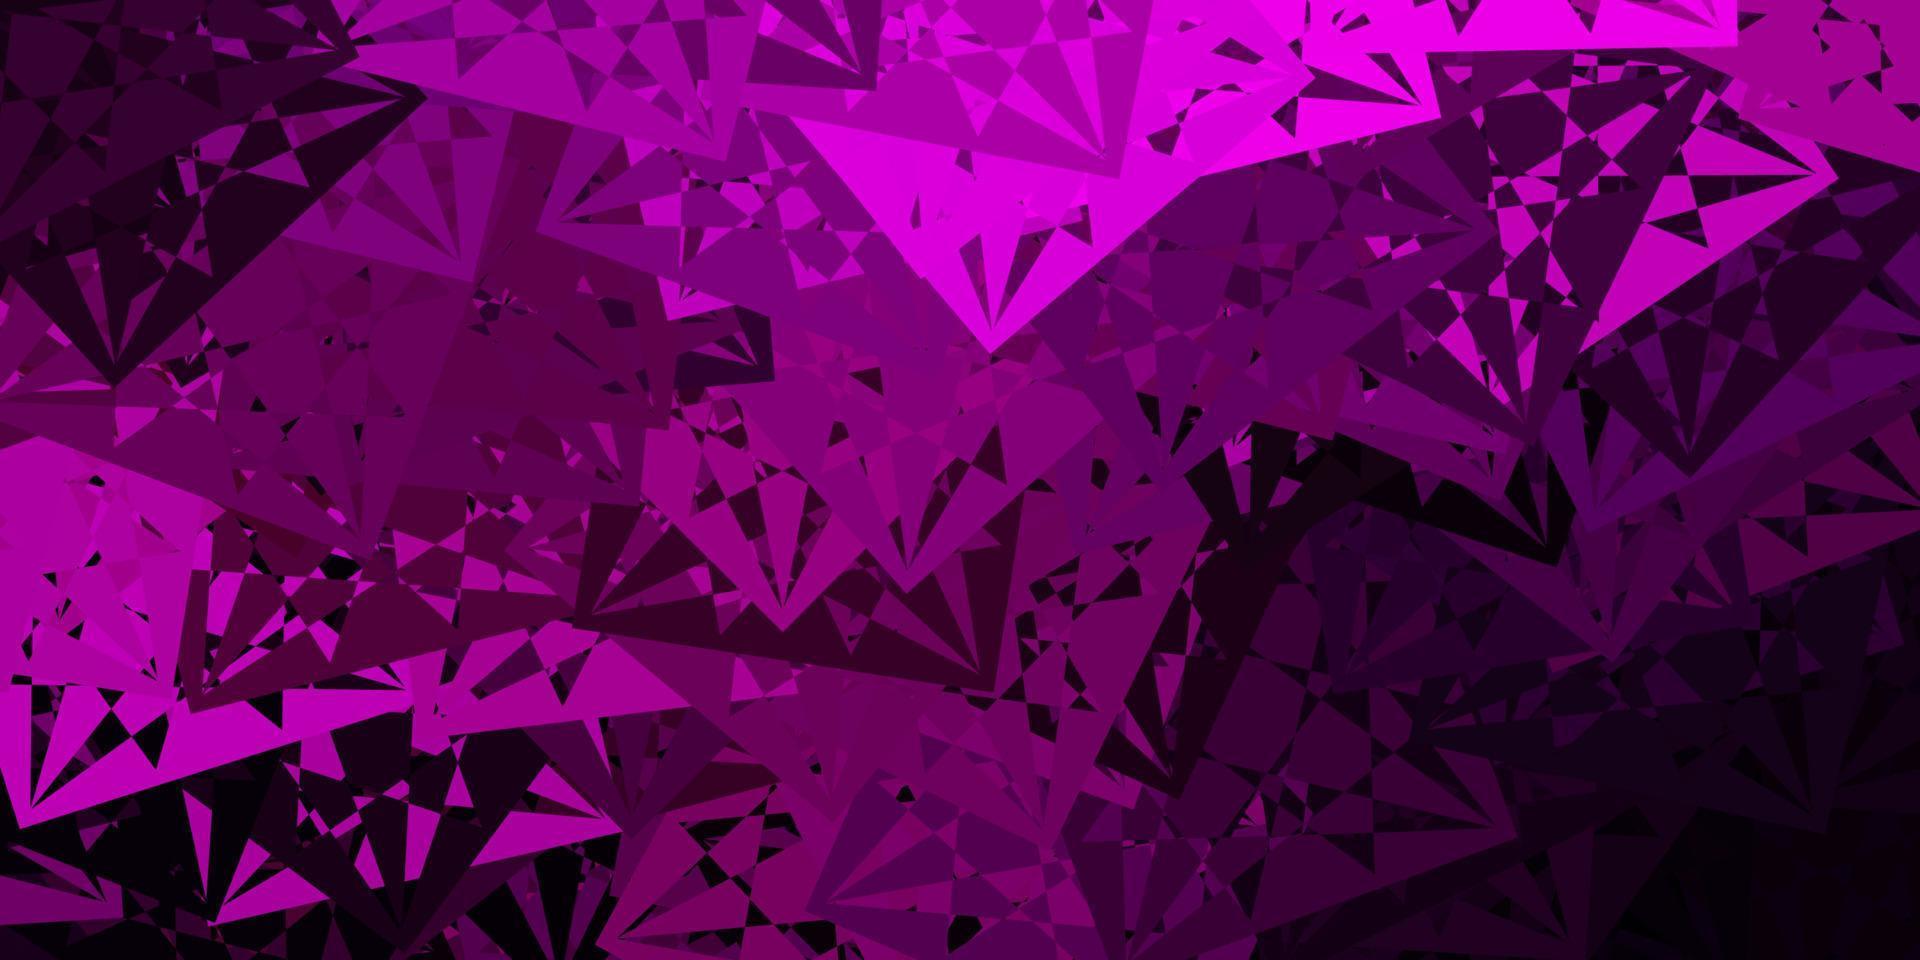 textura vector rosa escuro com triângulos aleatórios.